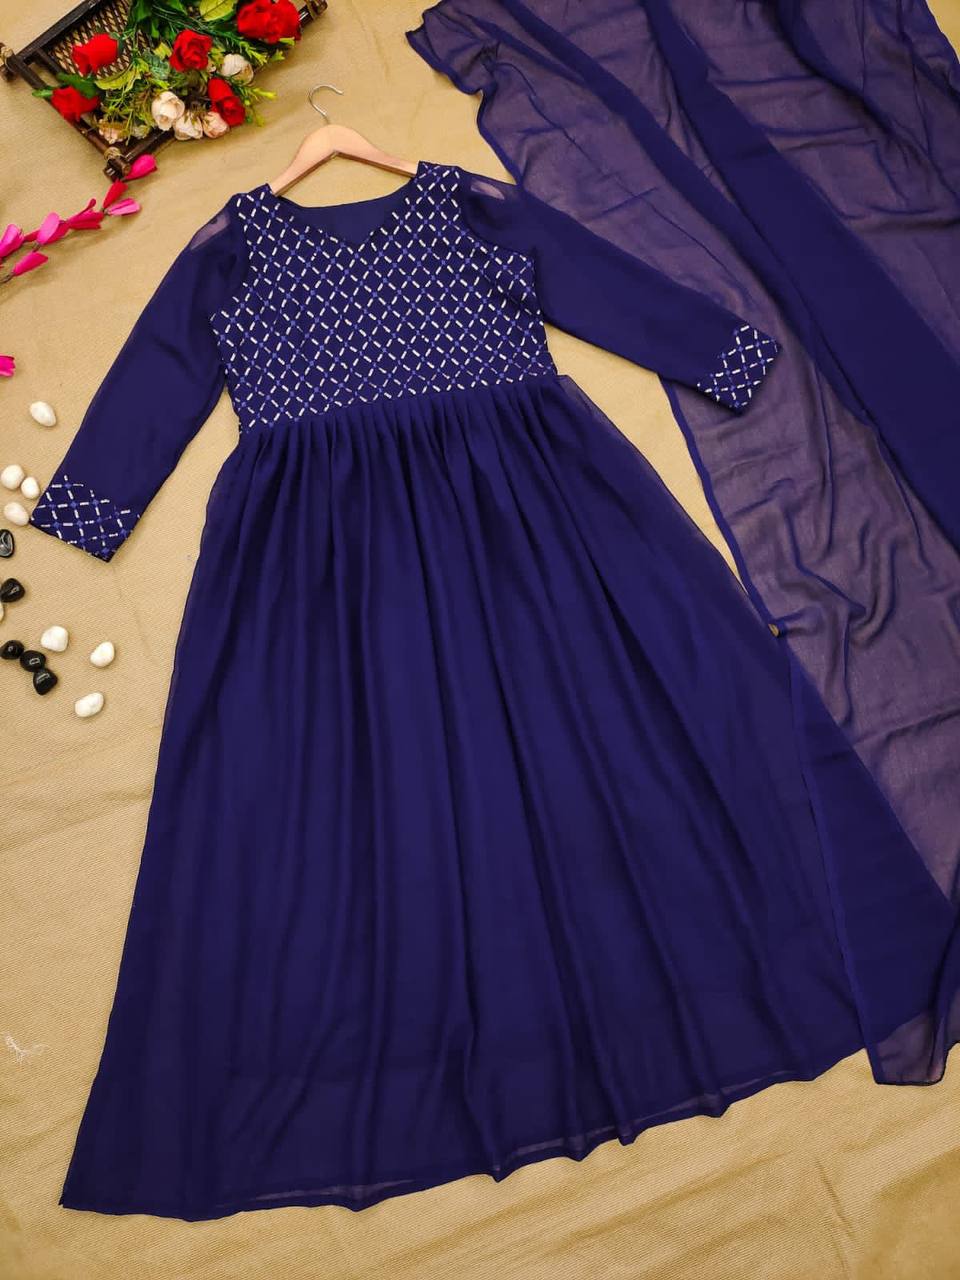 Georgette navy blue gown